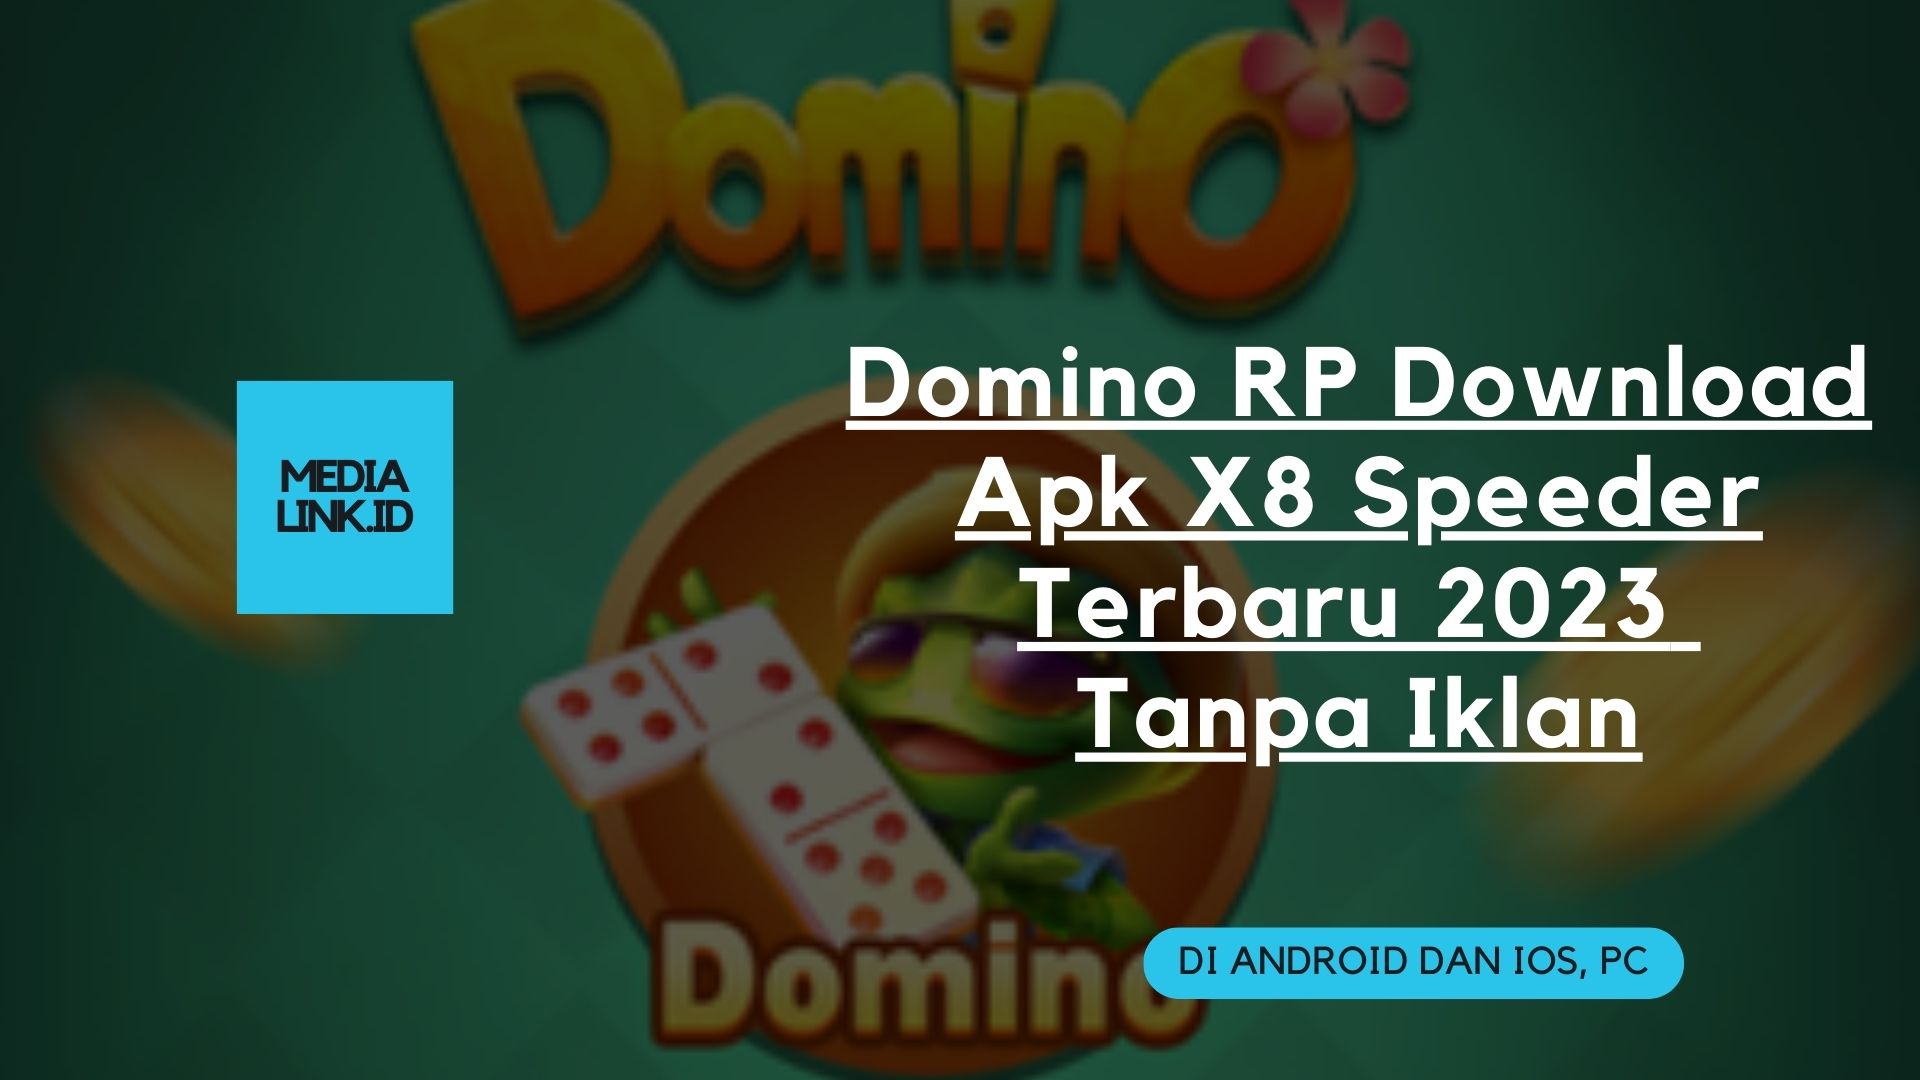 Domino Rp Download Apk X8 Speeder Terbaru 2023 Tanpa Iklan 5280